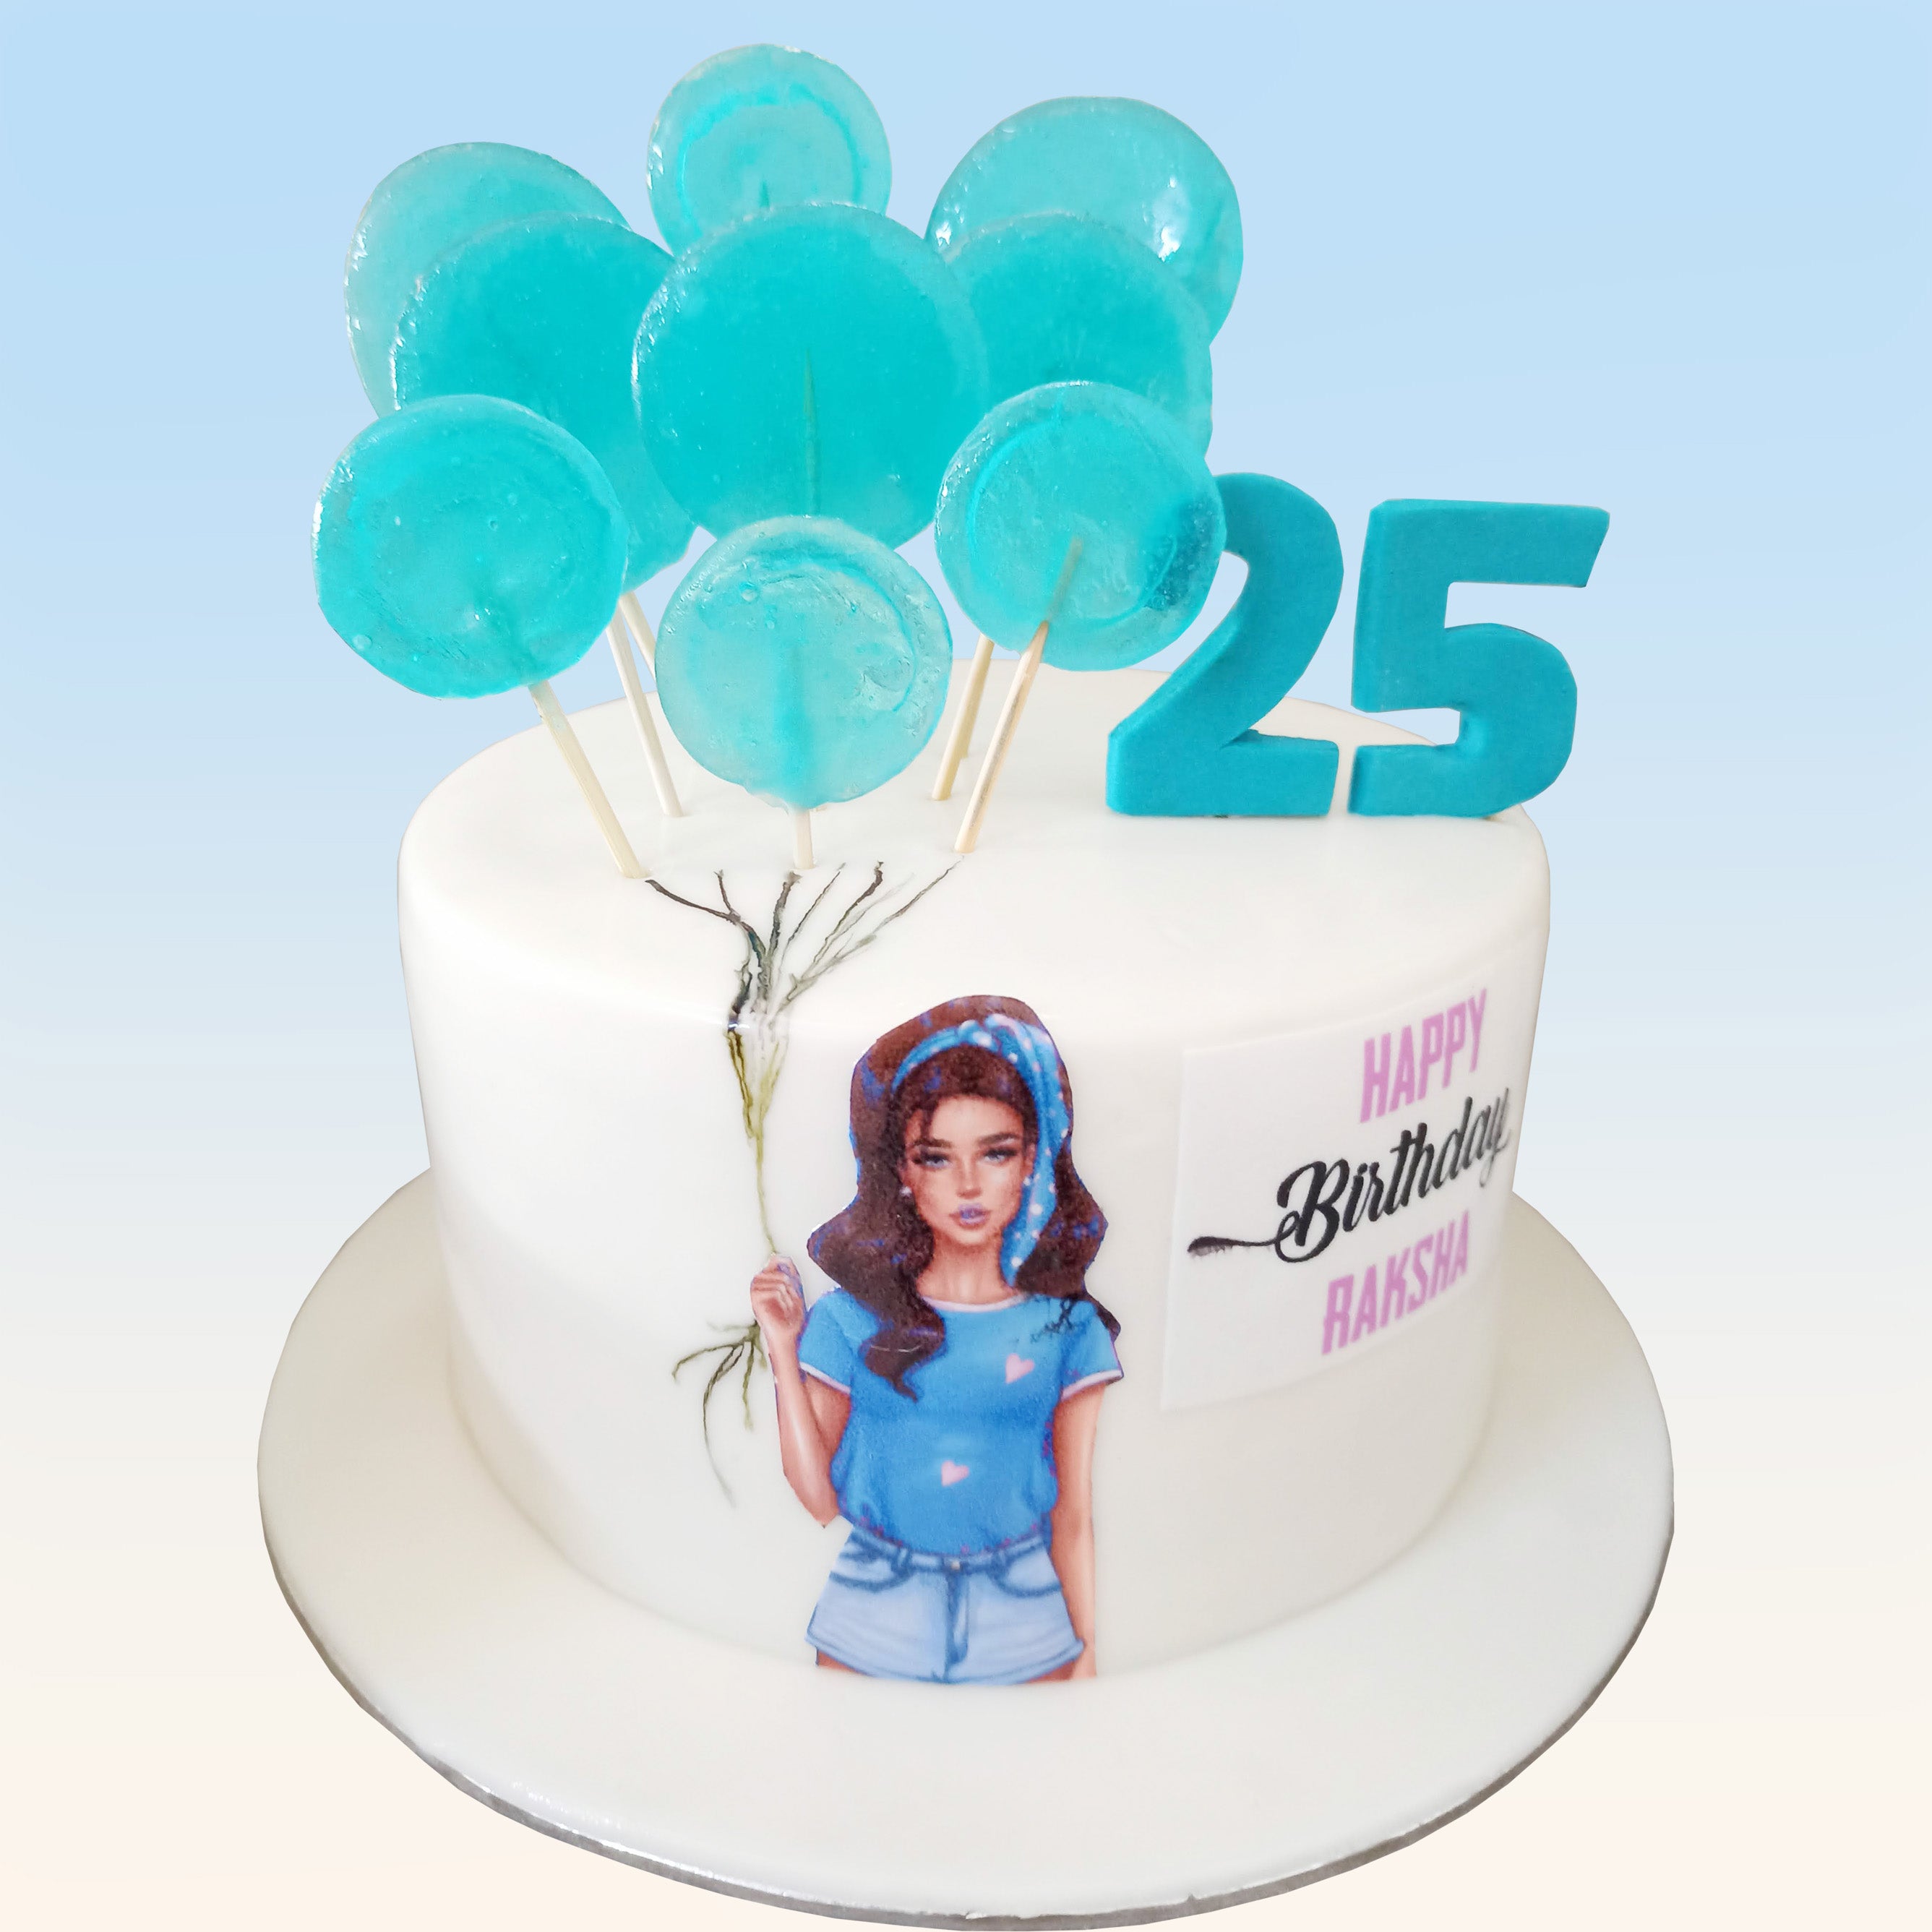 Girl with balloons cake - Picture of The House Of Cakes Bakery Dubai -  Tripadvisor